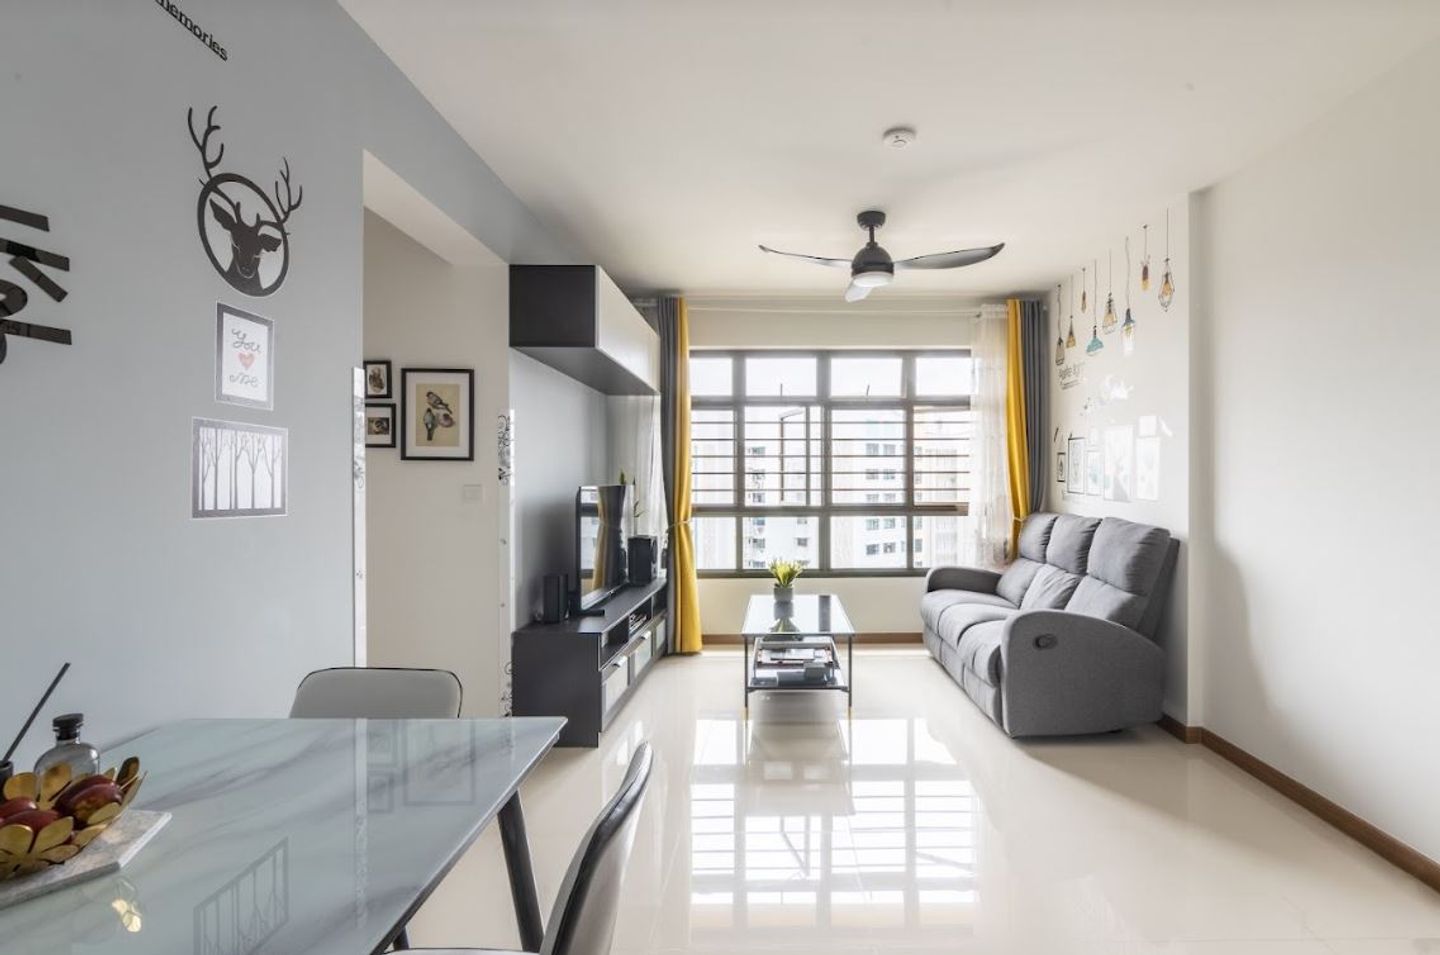 Minimalistic Living Room Design With TV Unit